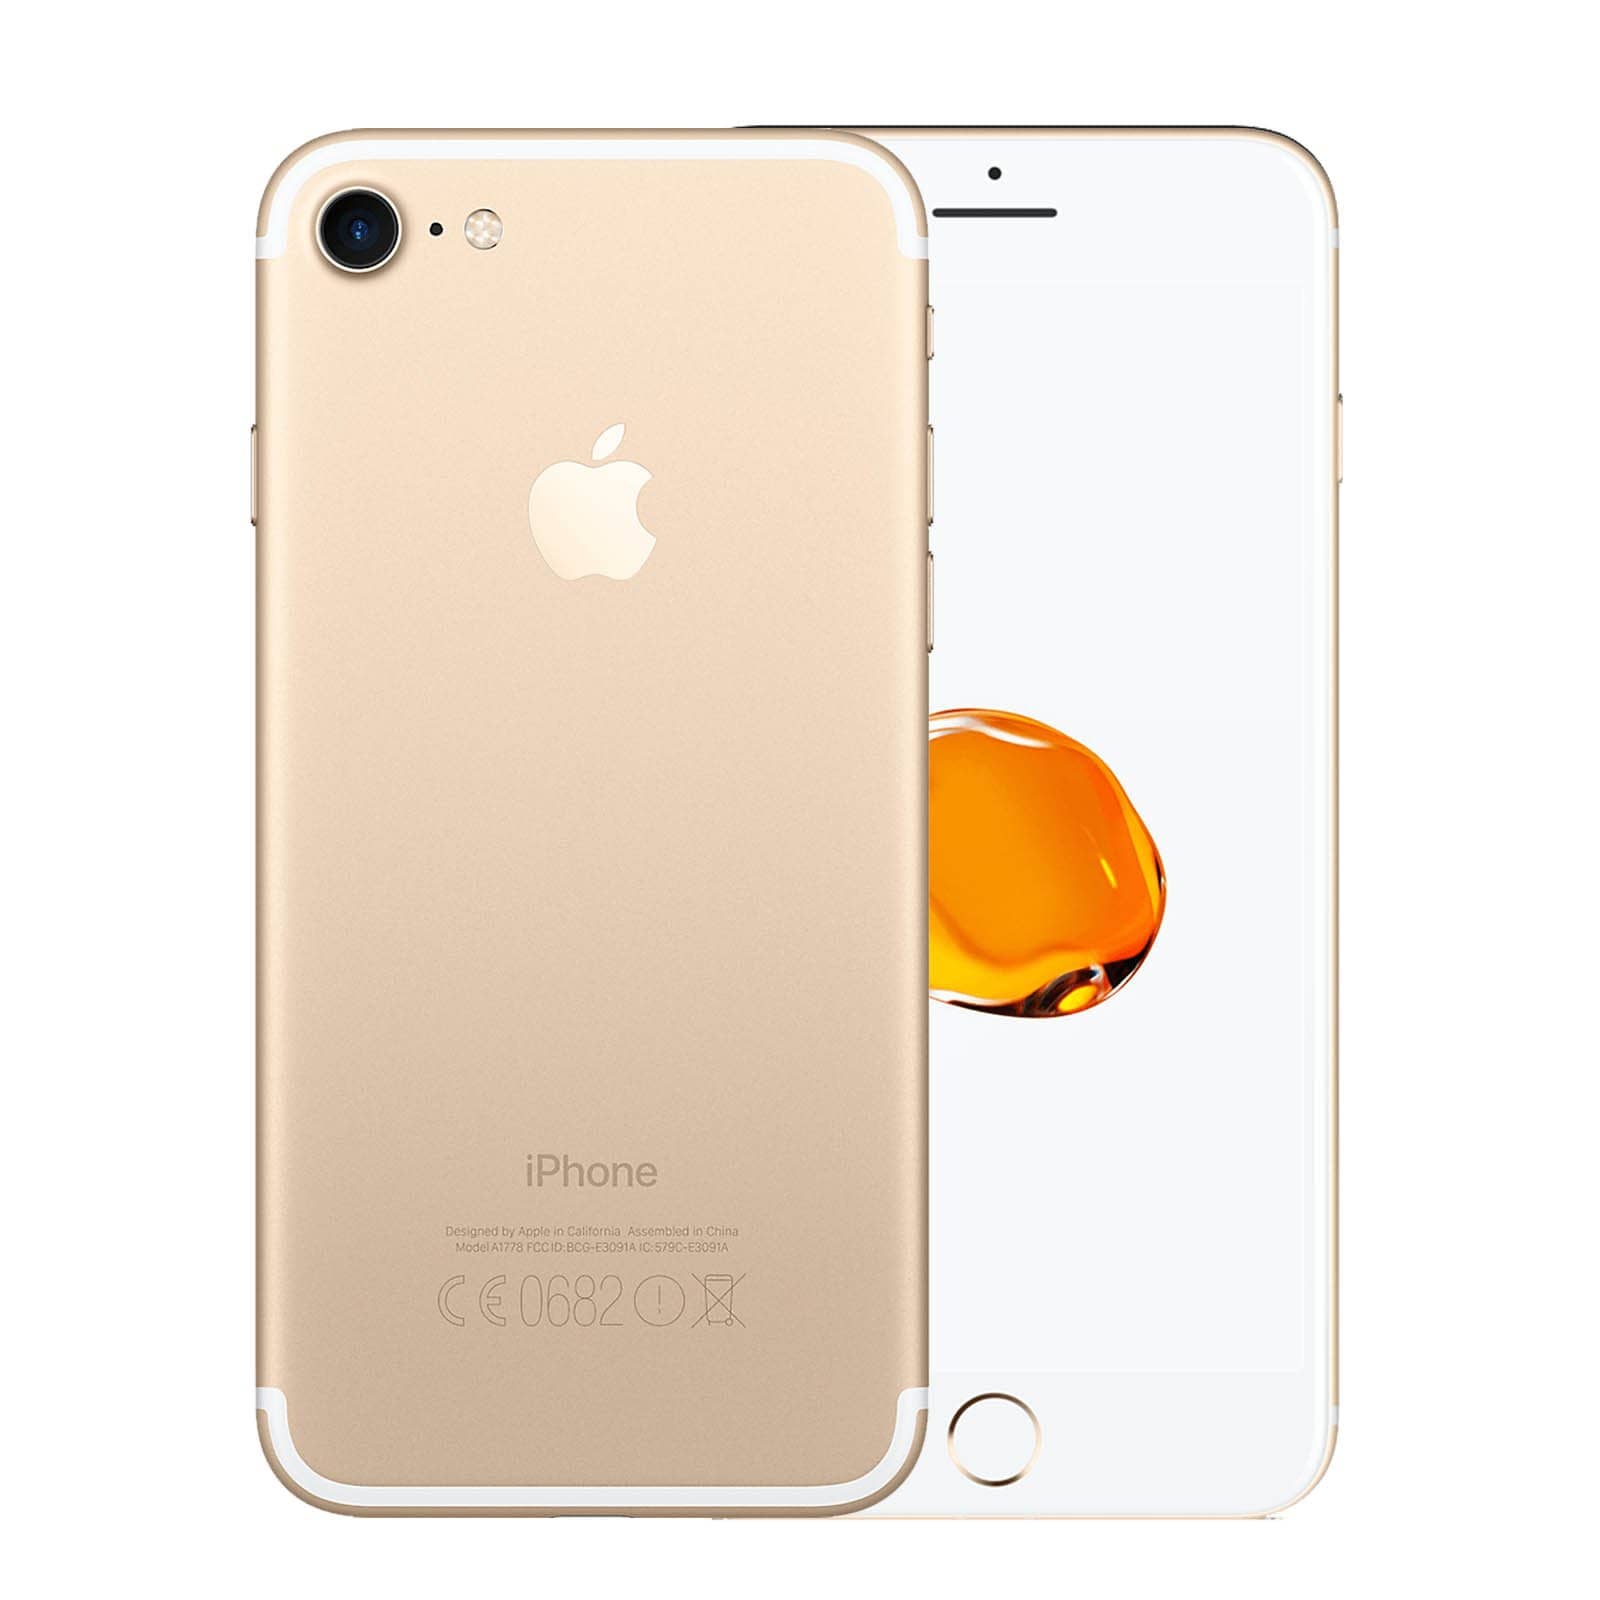 Apple iPhone 7 256GB Gold Very Good - Unlocked 256GB Gold Very Good